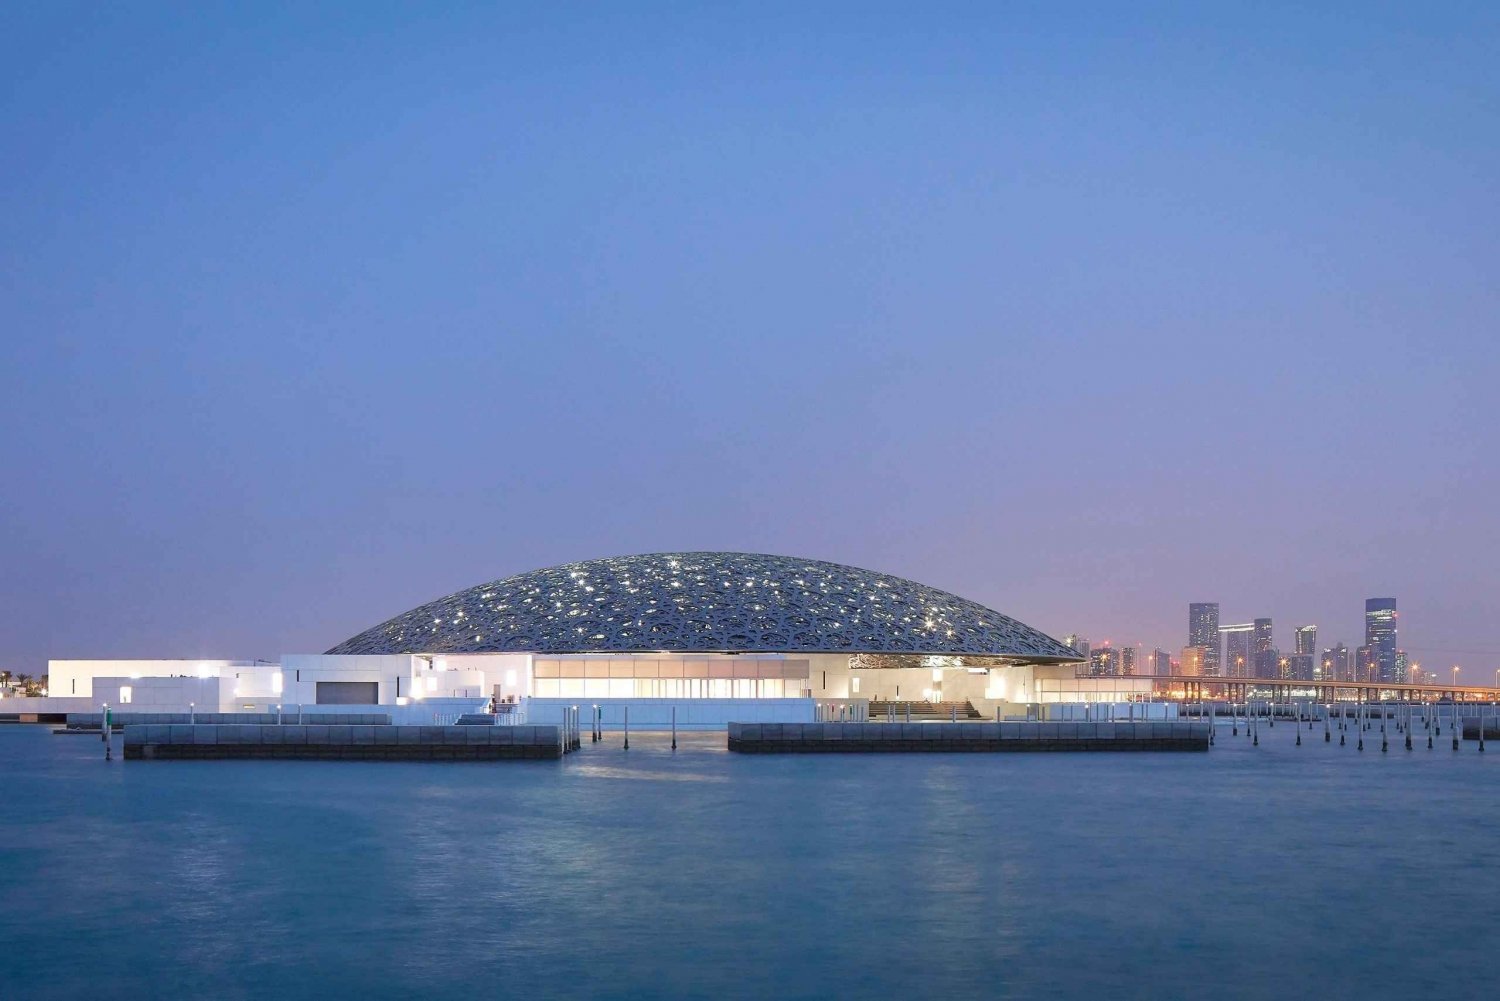 Vanuit Dubai: Stadsrondleiding Abu Dhabi met Louvre Museum